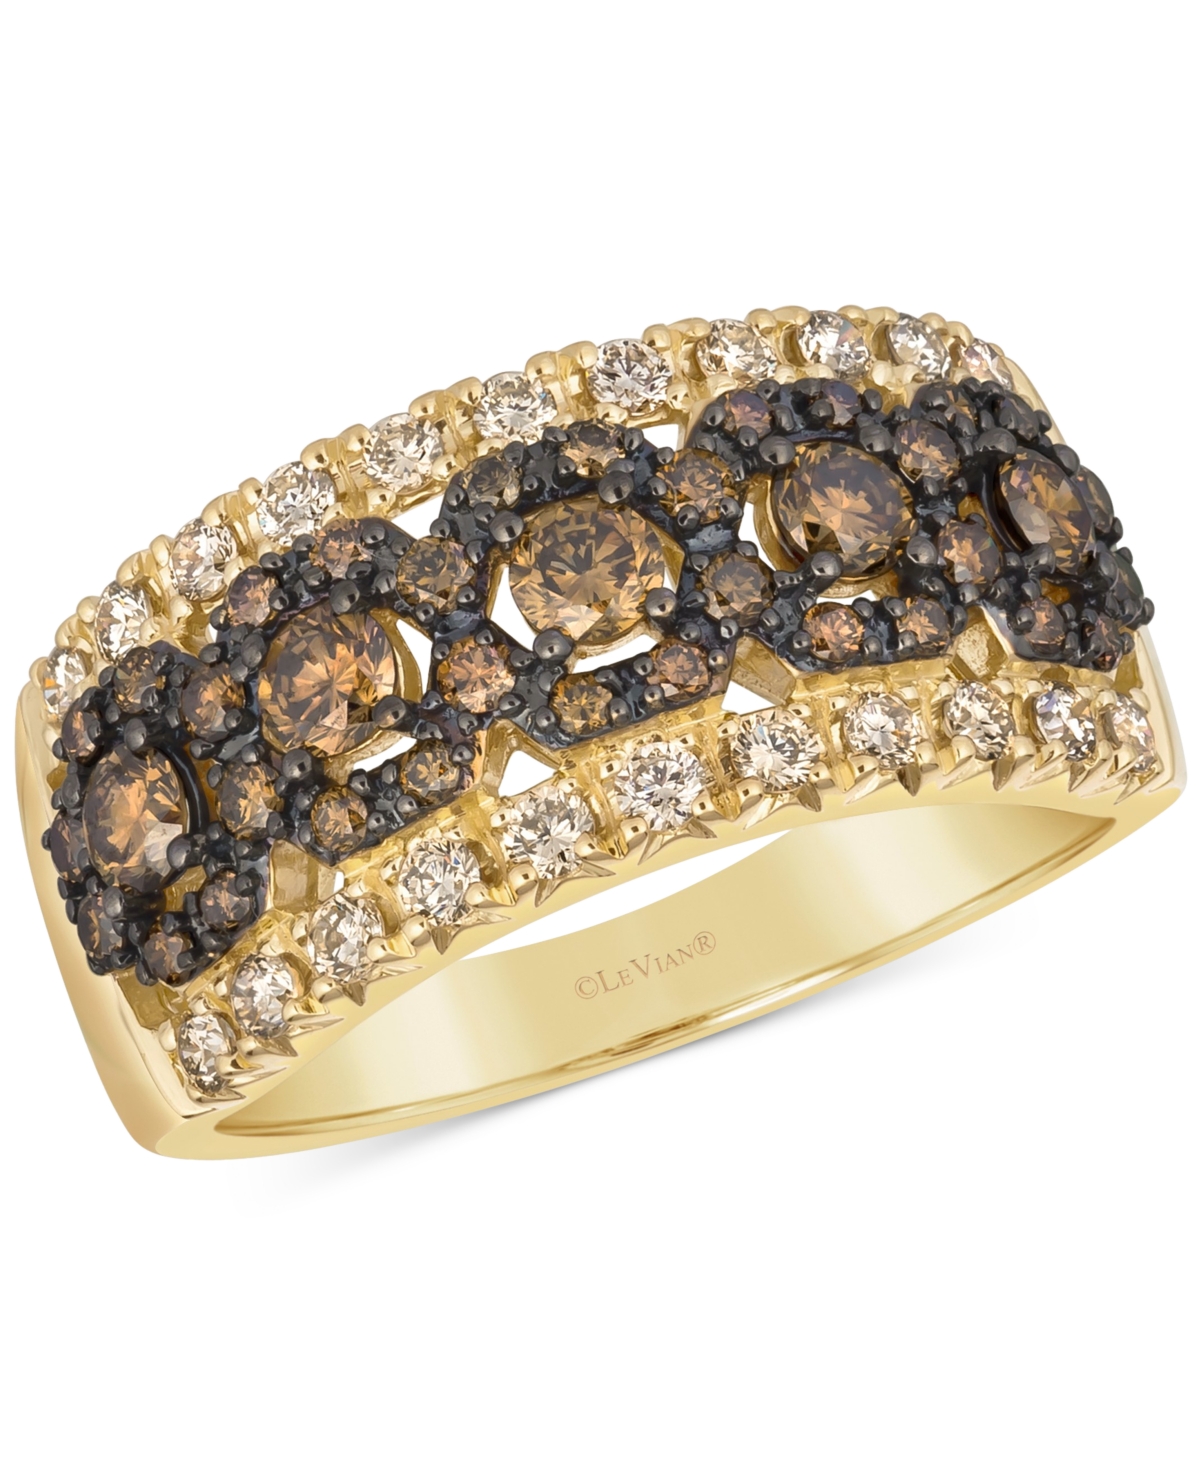 Chocolate Diamond & Nude Diamond Fancy Openwork Ring (1-1/6 ct. t.w.) in 14k Gold